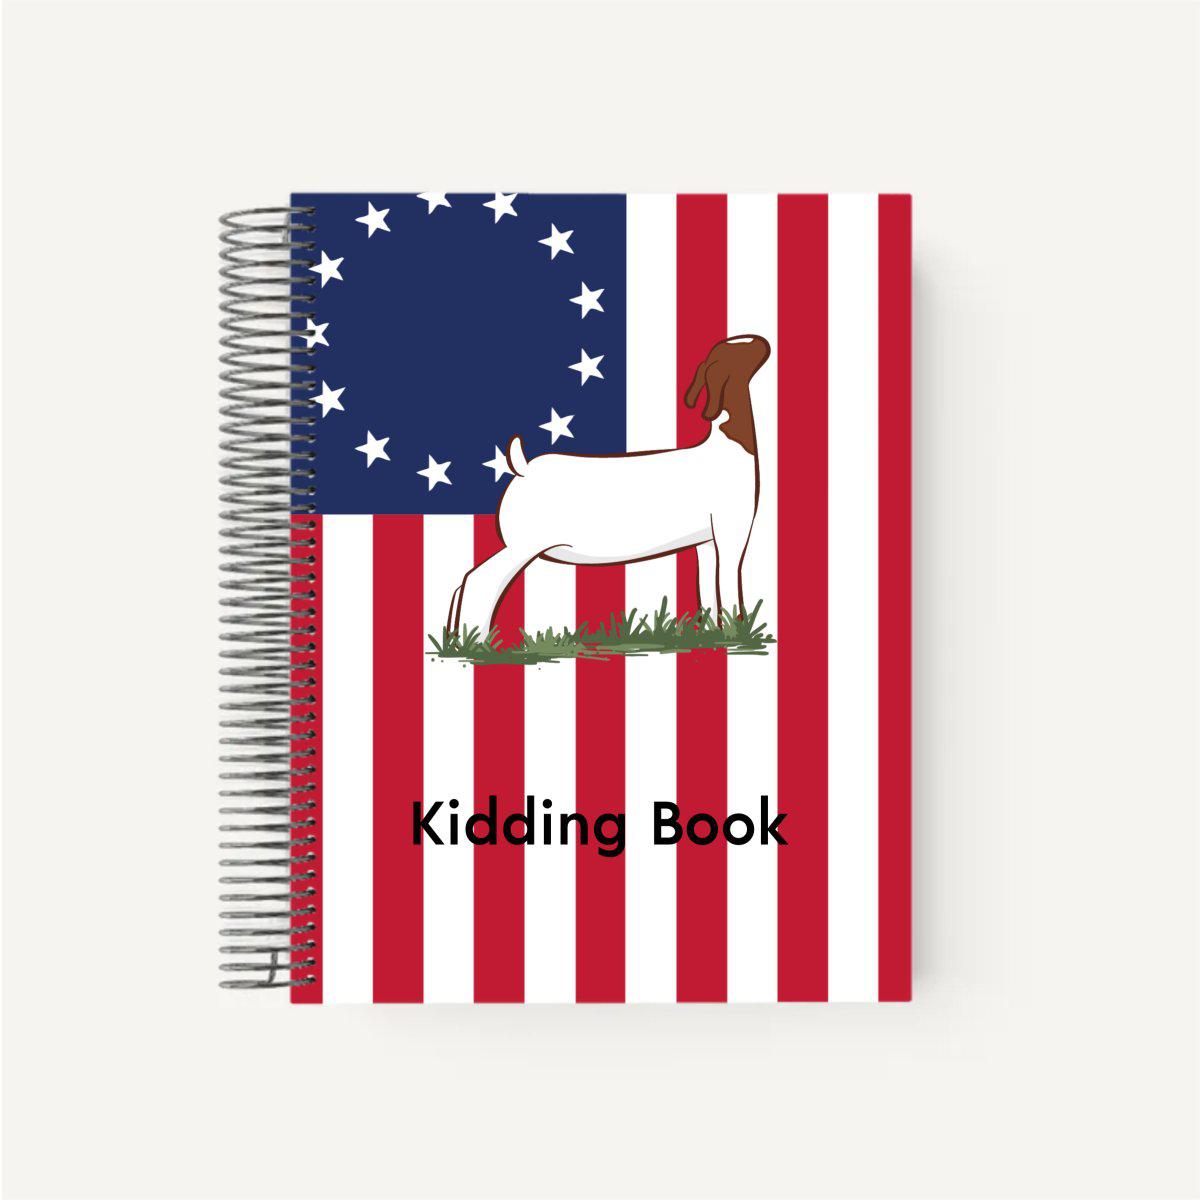 Personalized-Livestock-Kidding Record Planner - Patriotic Cover